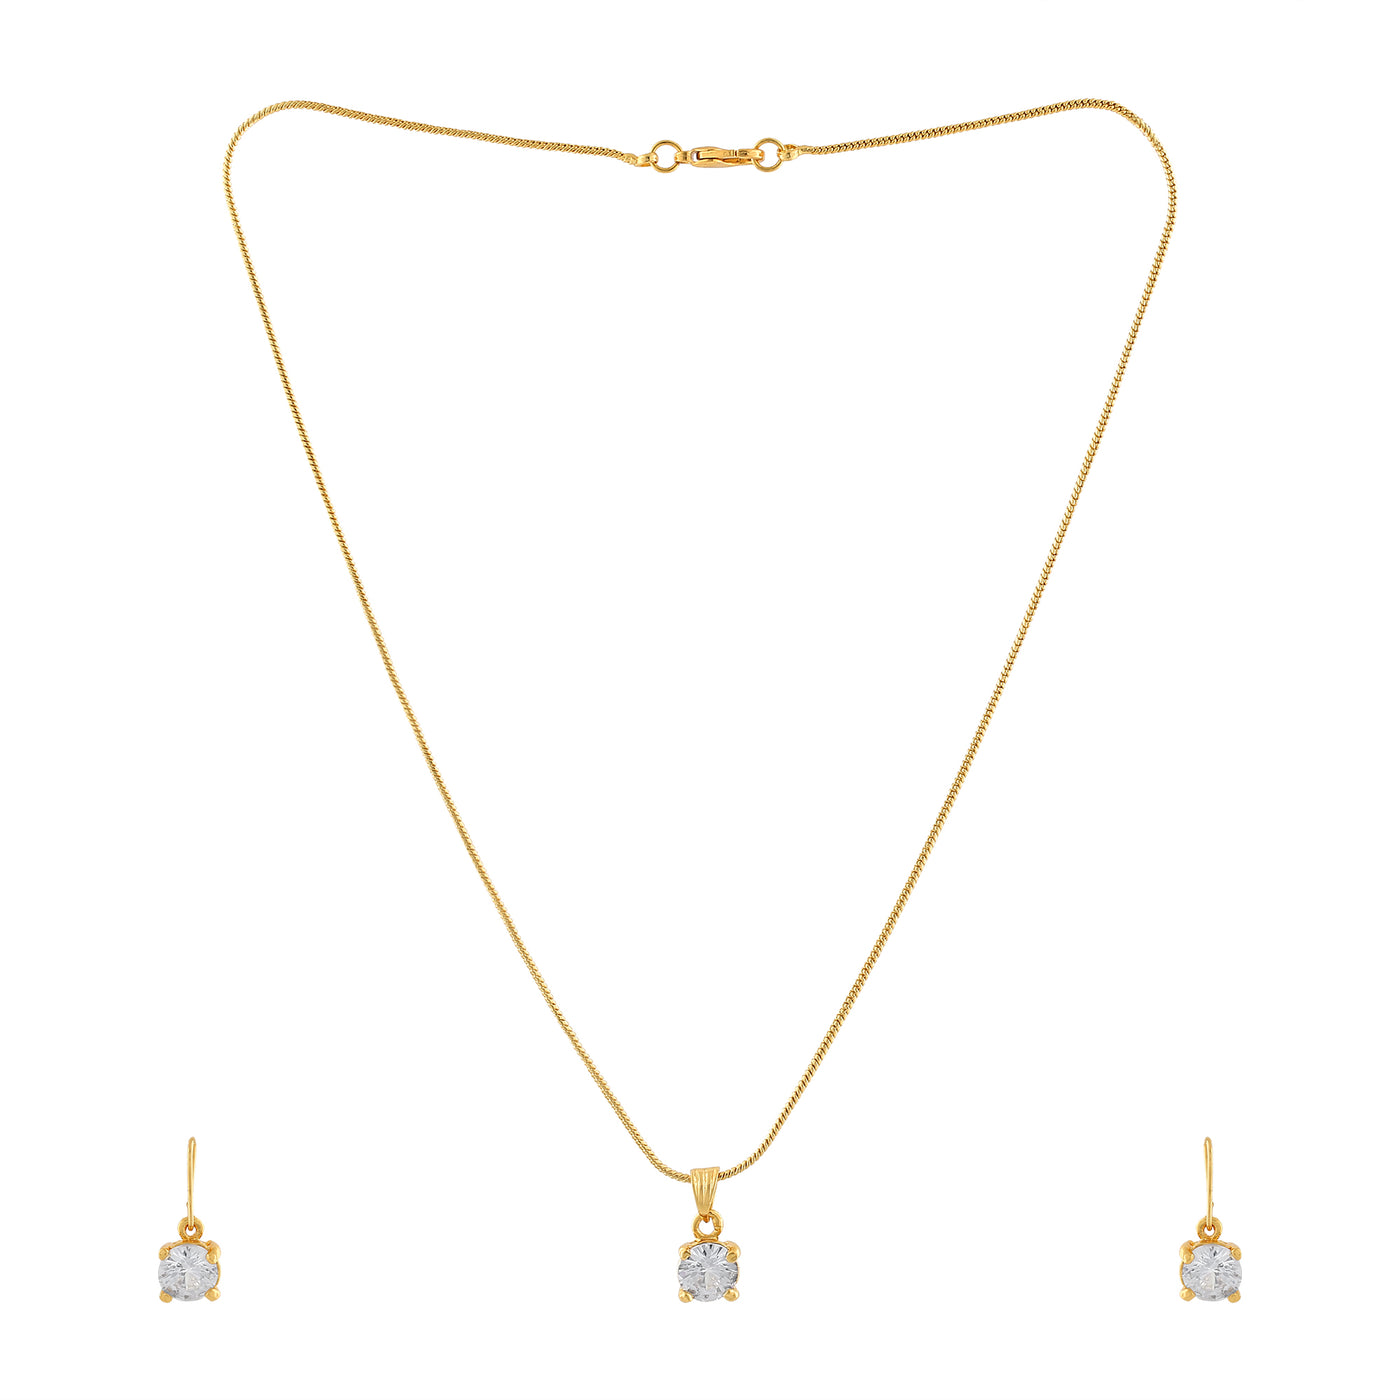 Estele - 24 KT Gold plated square solitaire pendant Set for Women